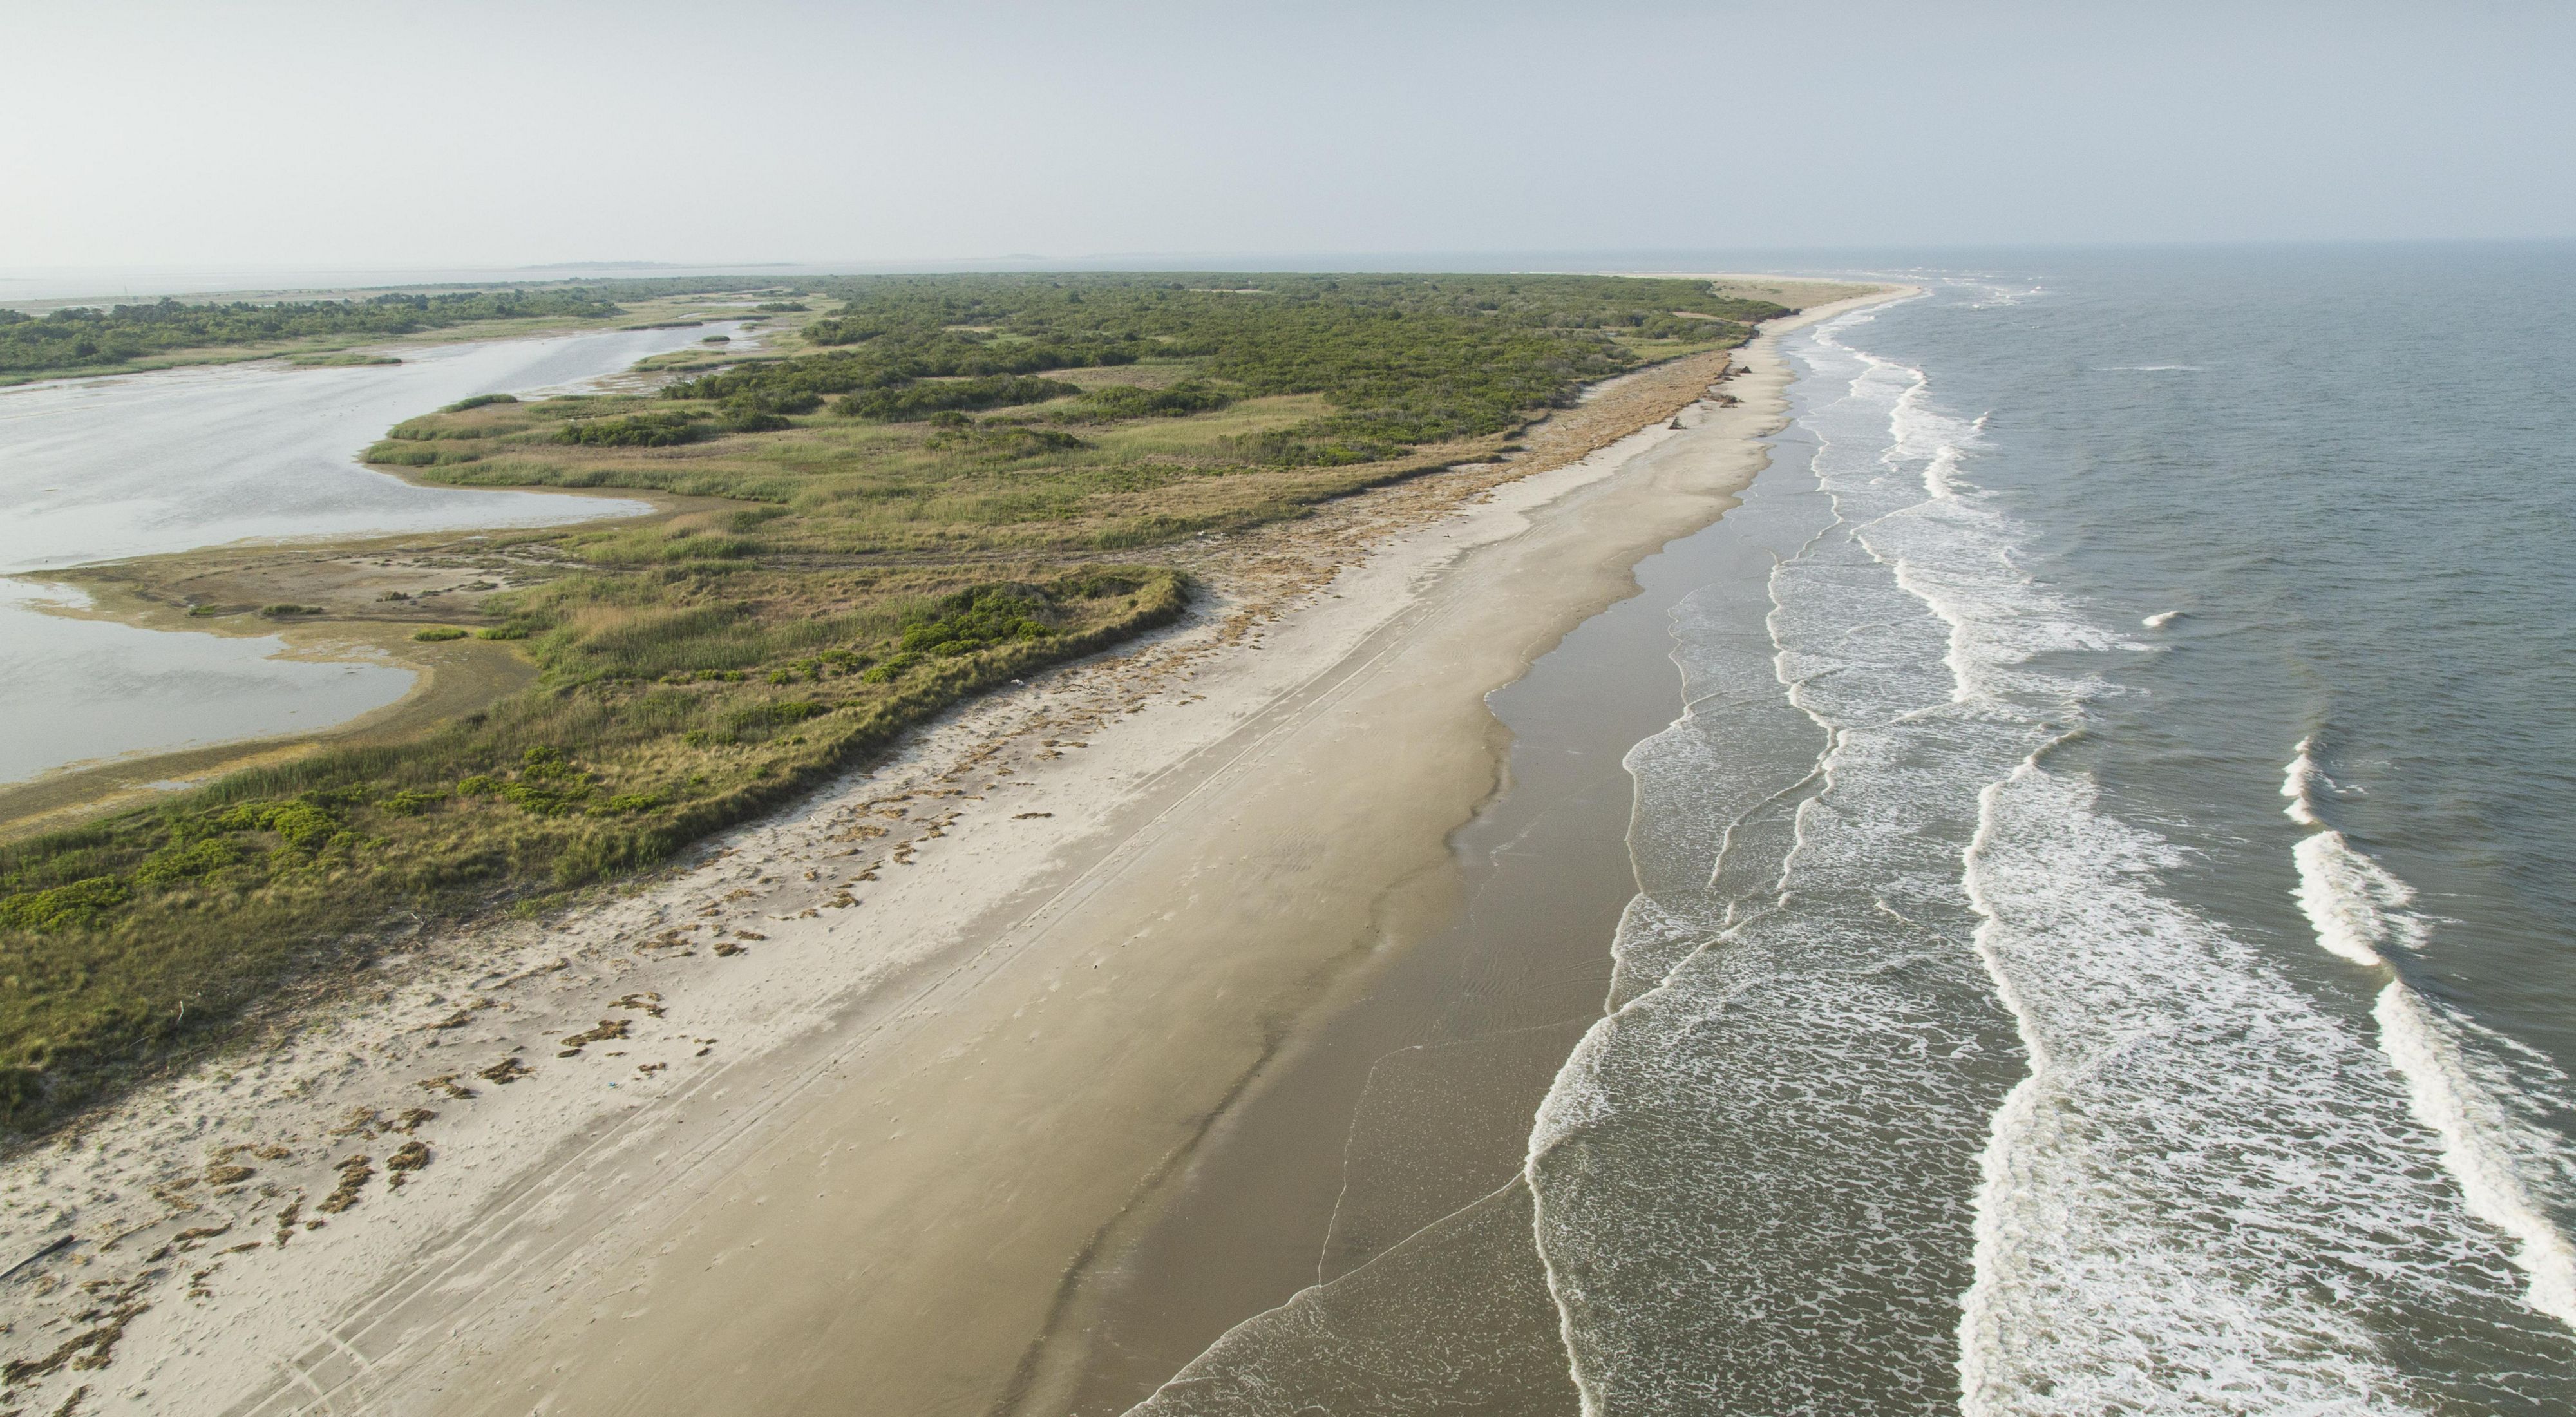 Aerial view of an isolated sandy beach along the coast of Hog Island, South Carolina.